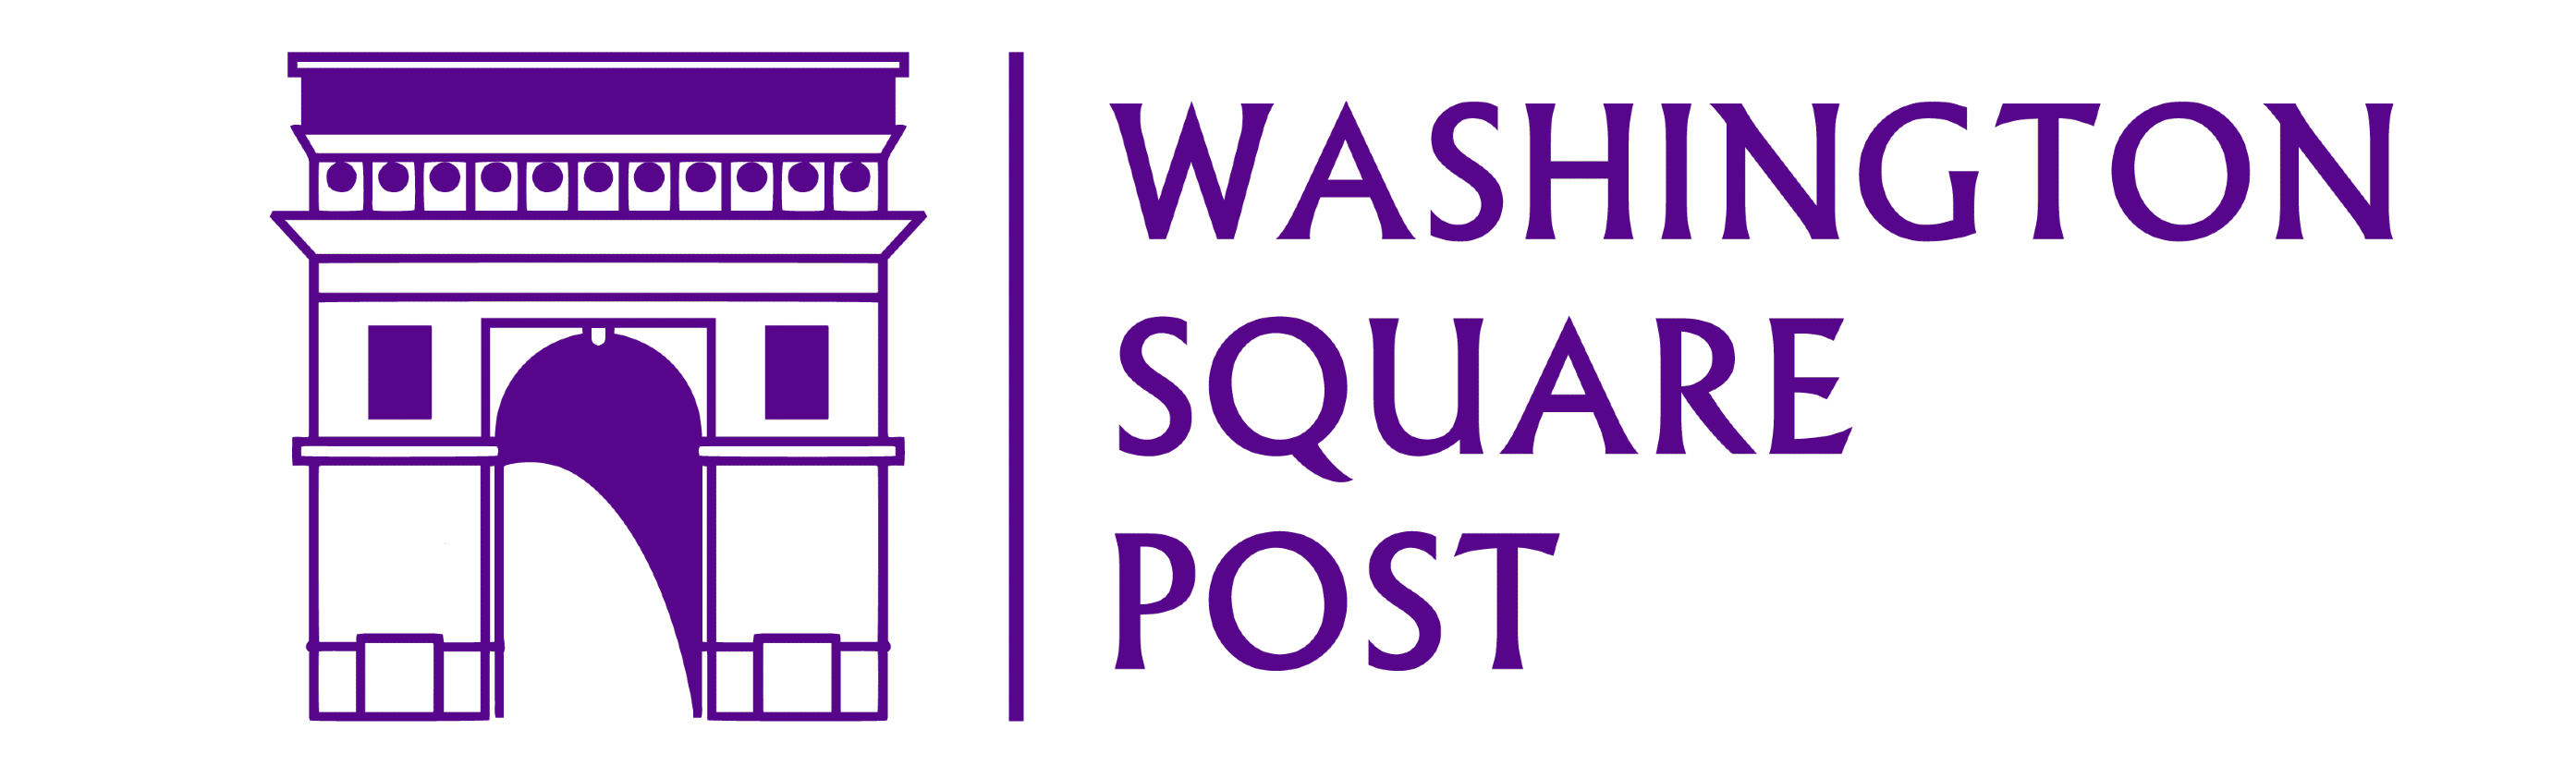 Washington Square Post